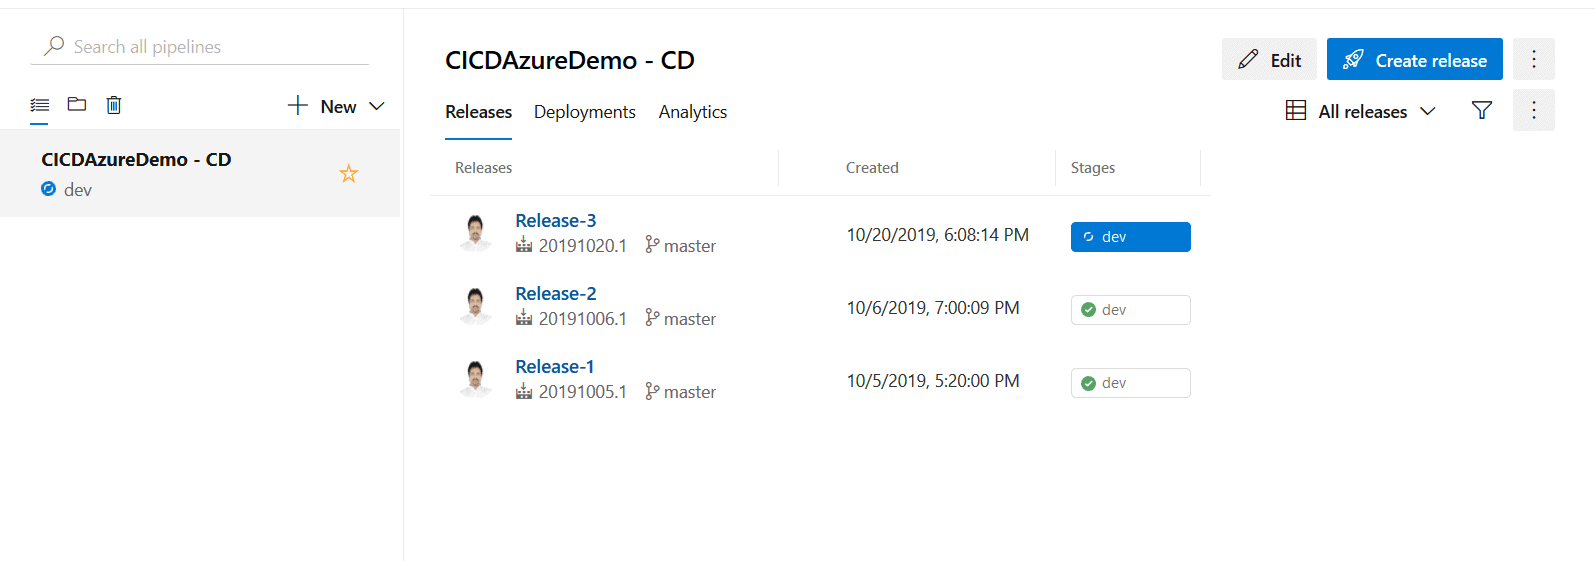 Configure CI/CD in Azure DevOps the release process